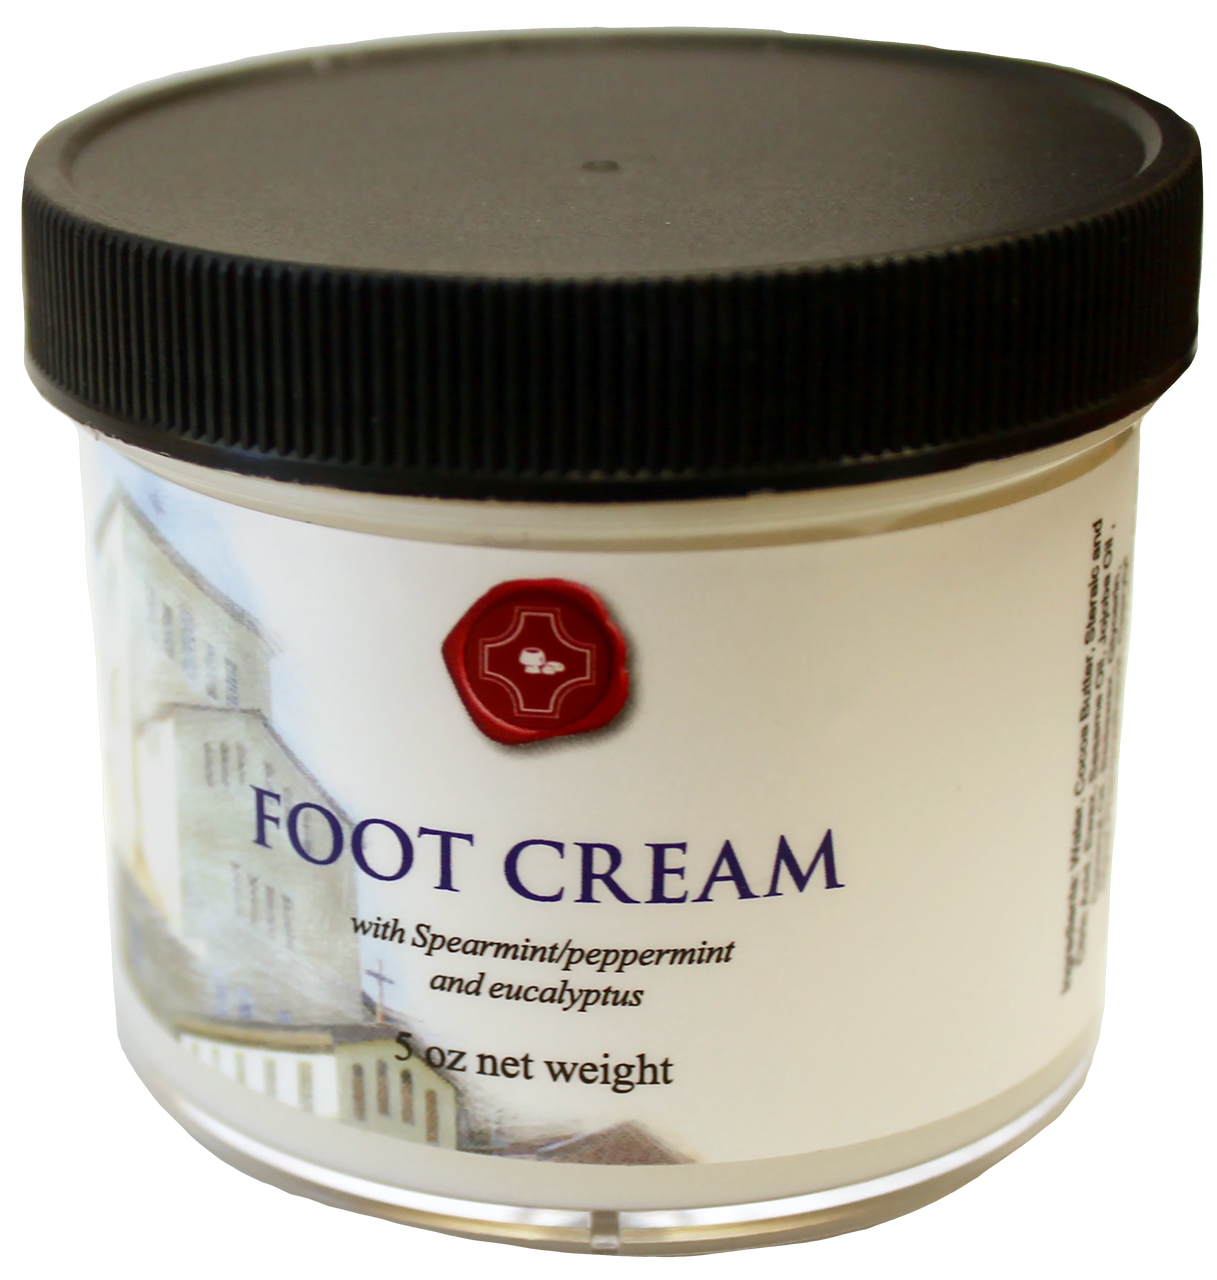 Sister Josetta's Foot Cream with Spearmint/Peppermint and Eucalyptus